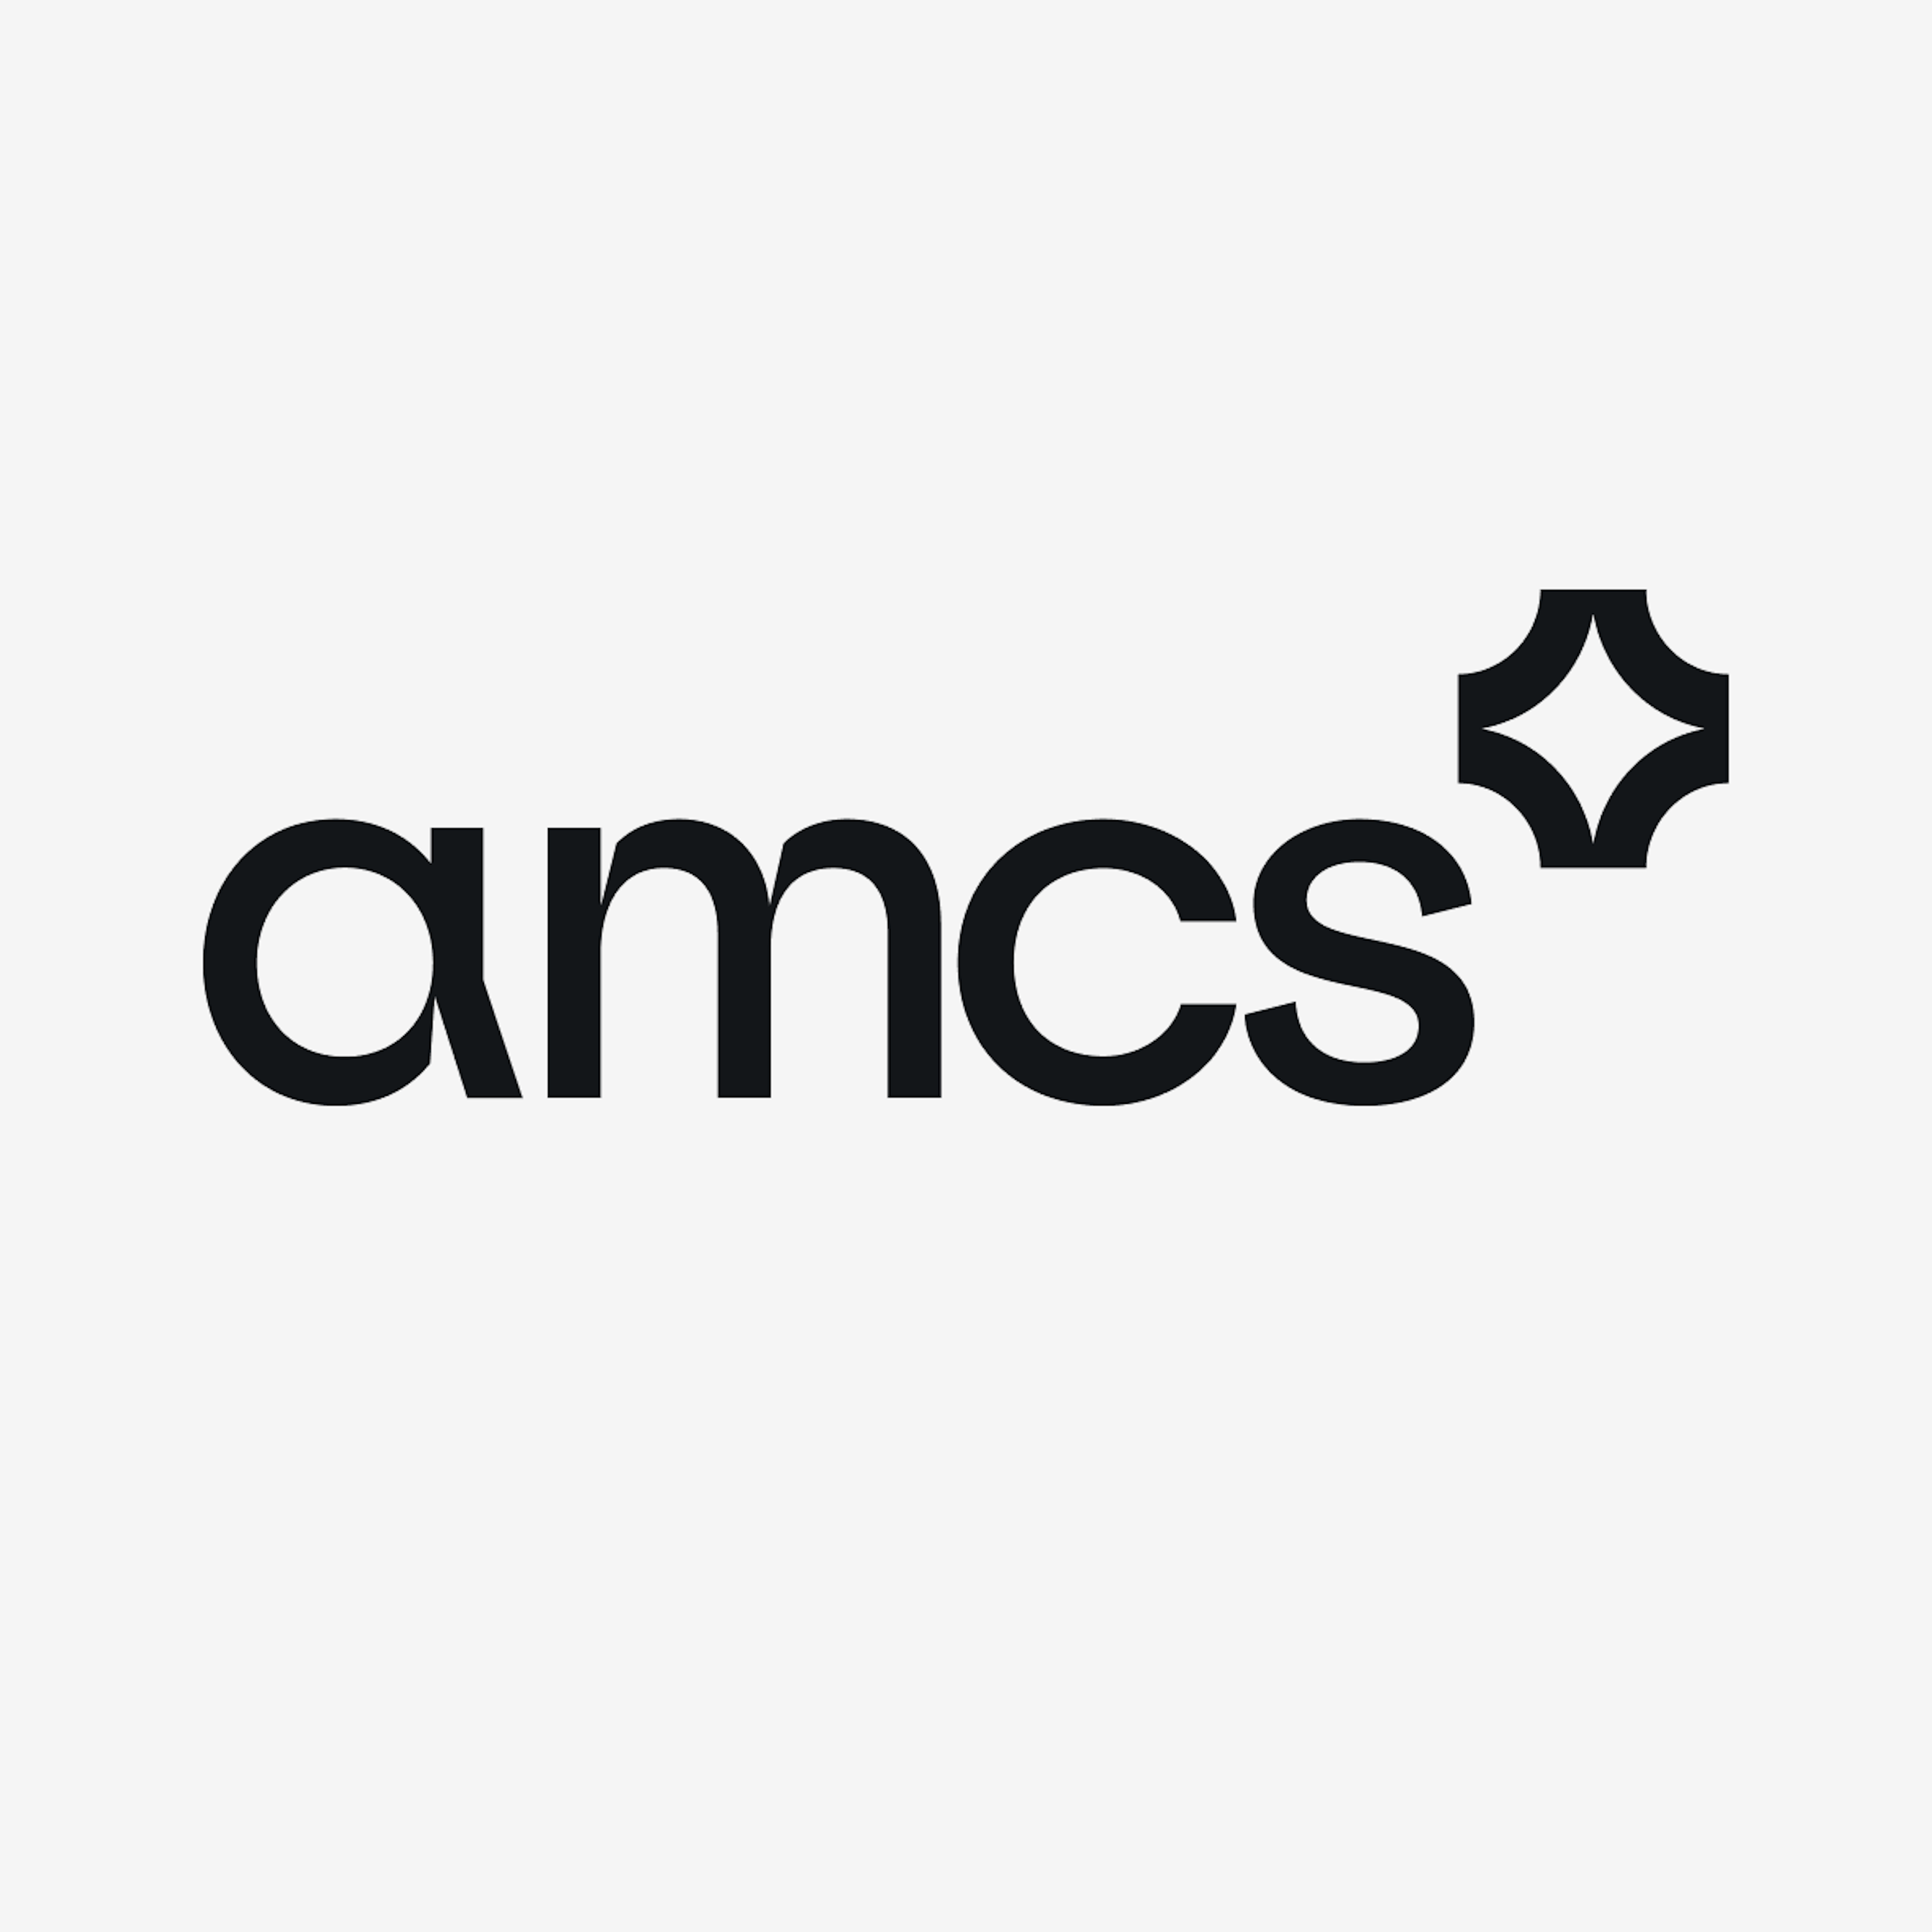 AMCS Utility Billing Logo